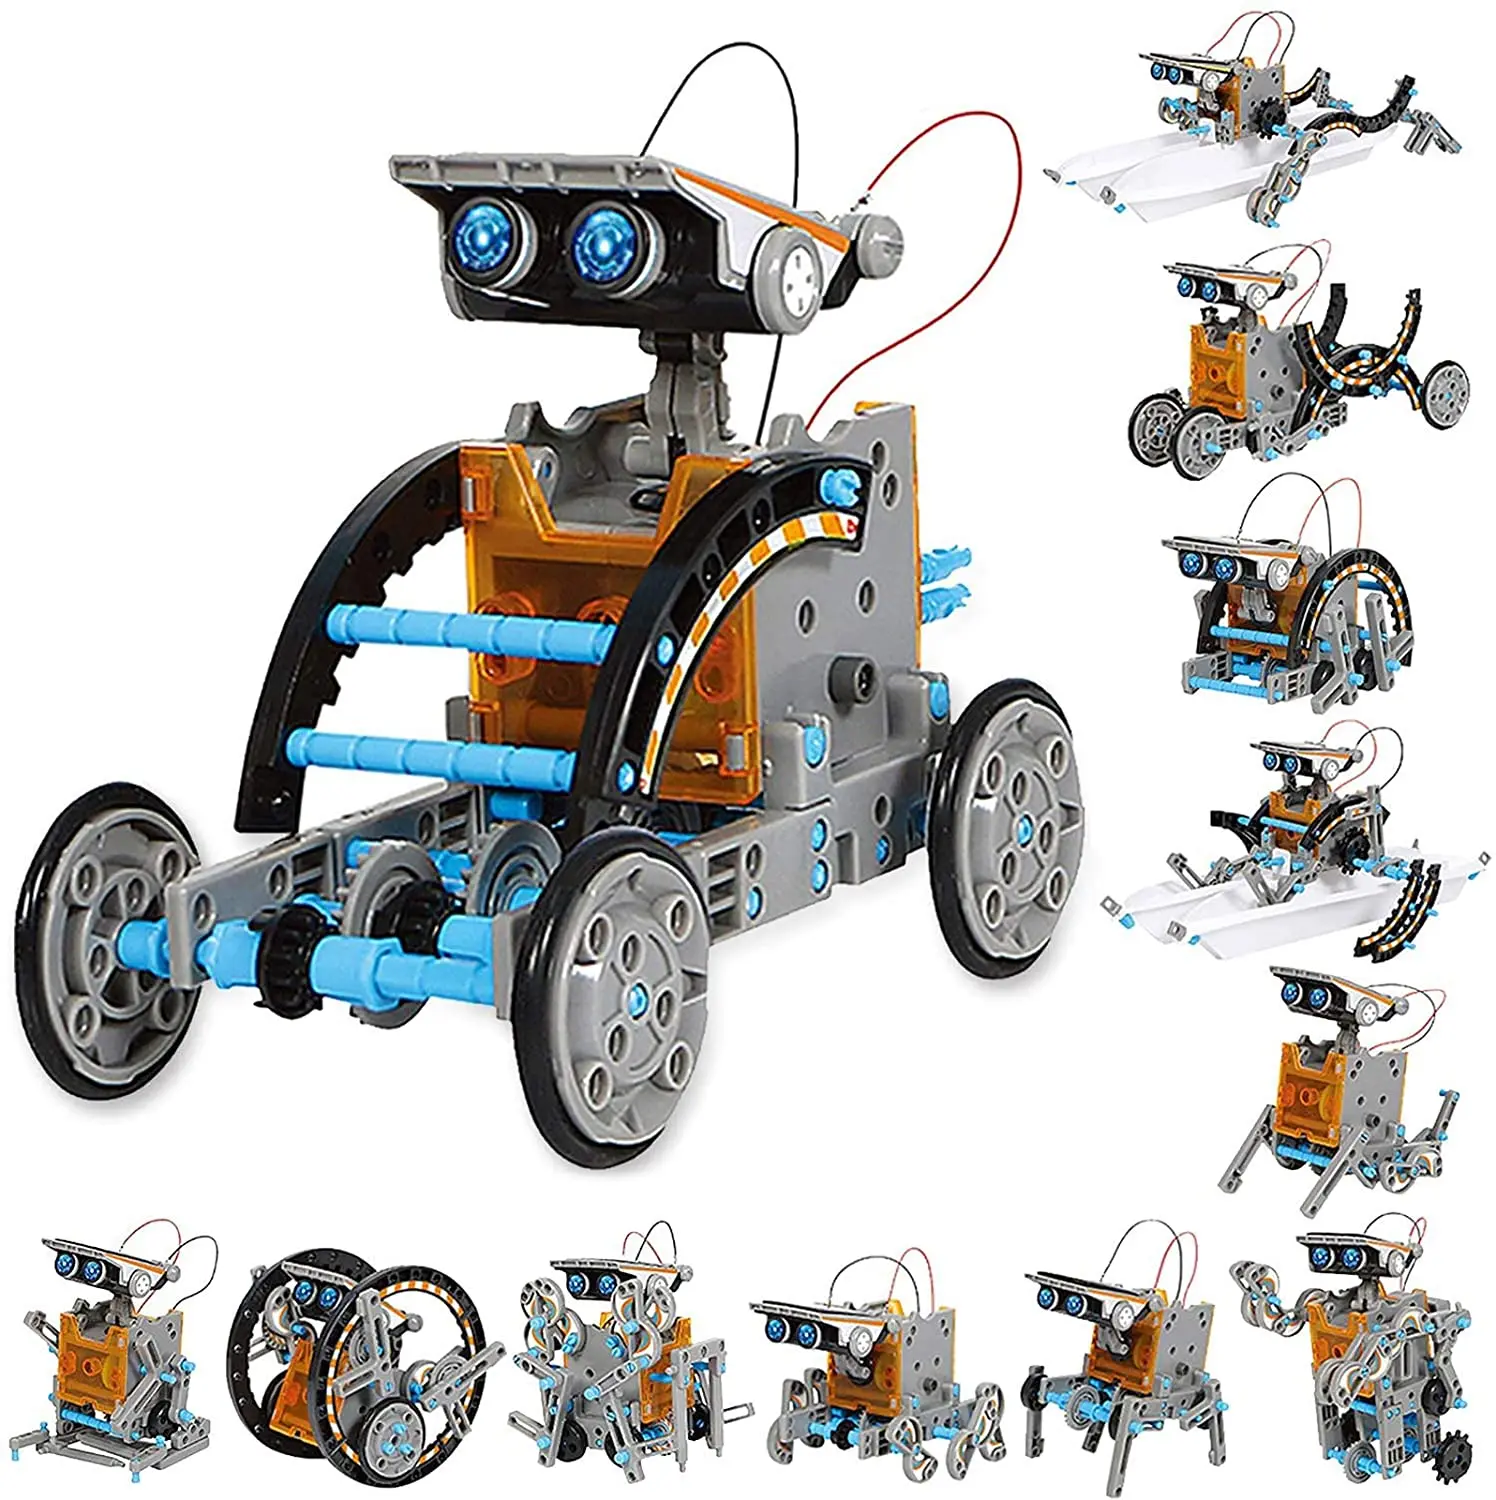 STEM 12-in-1 Education Solar Robot Toys 190 Pieces DIY Building Science 